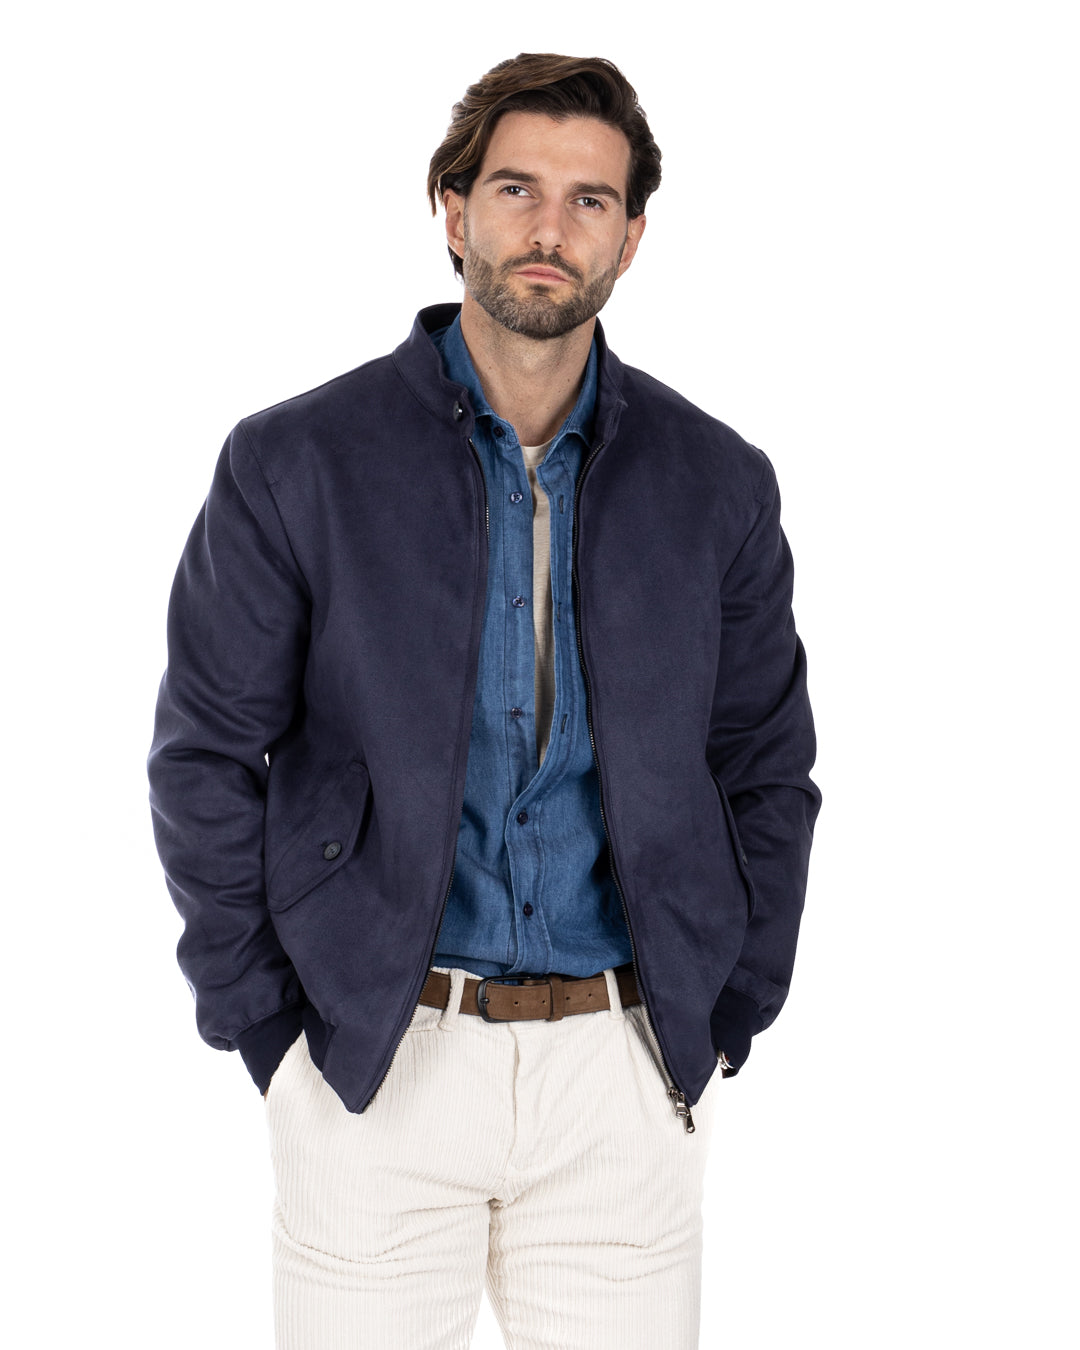 Alis - blue eco-suede jacket with zip